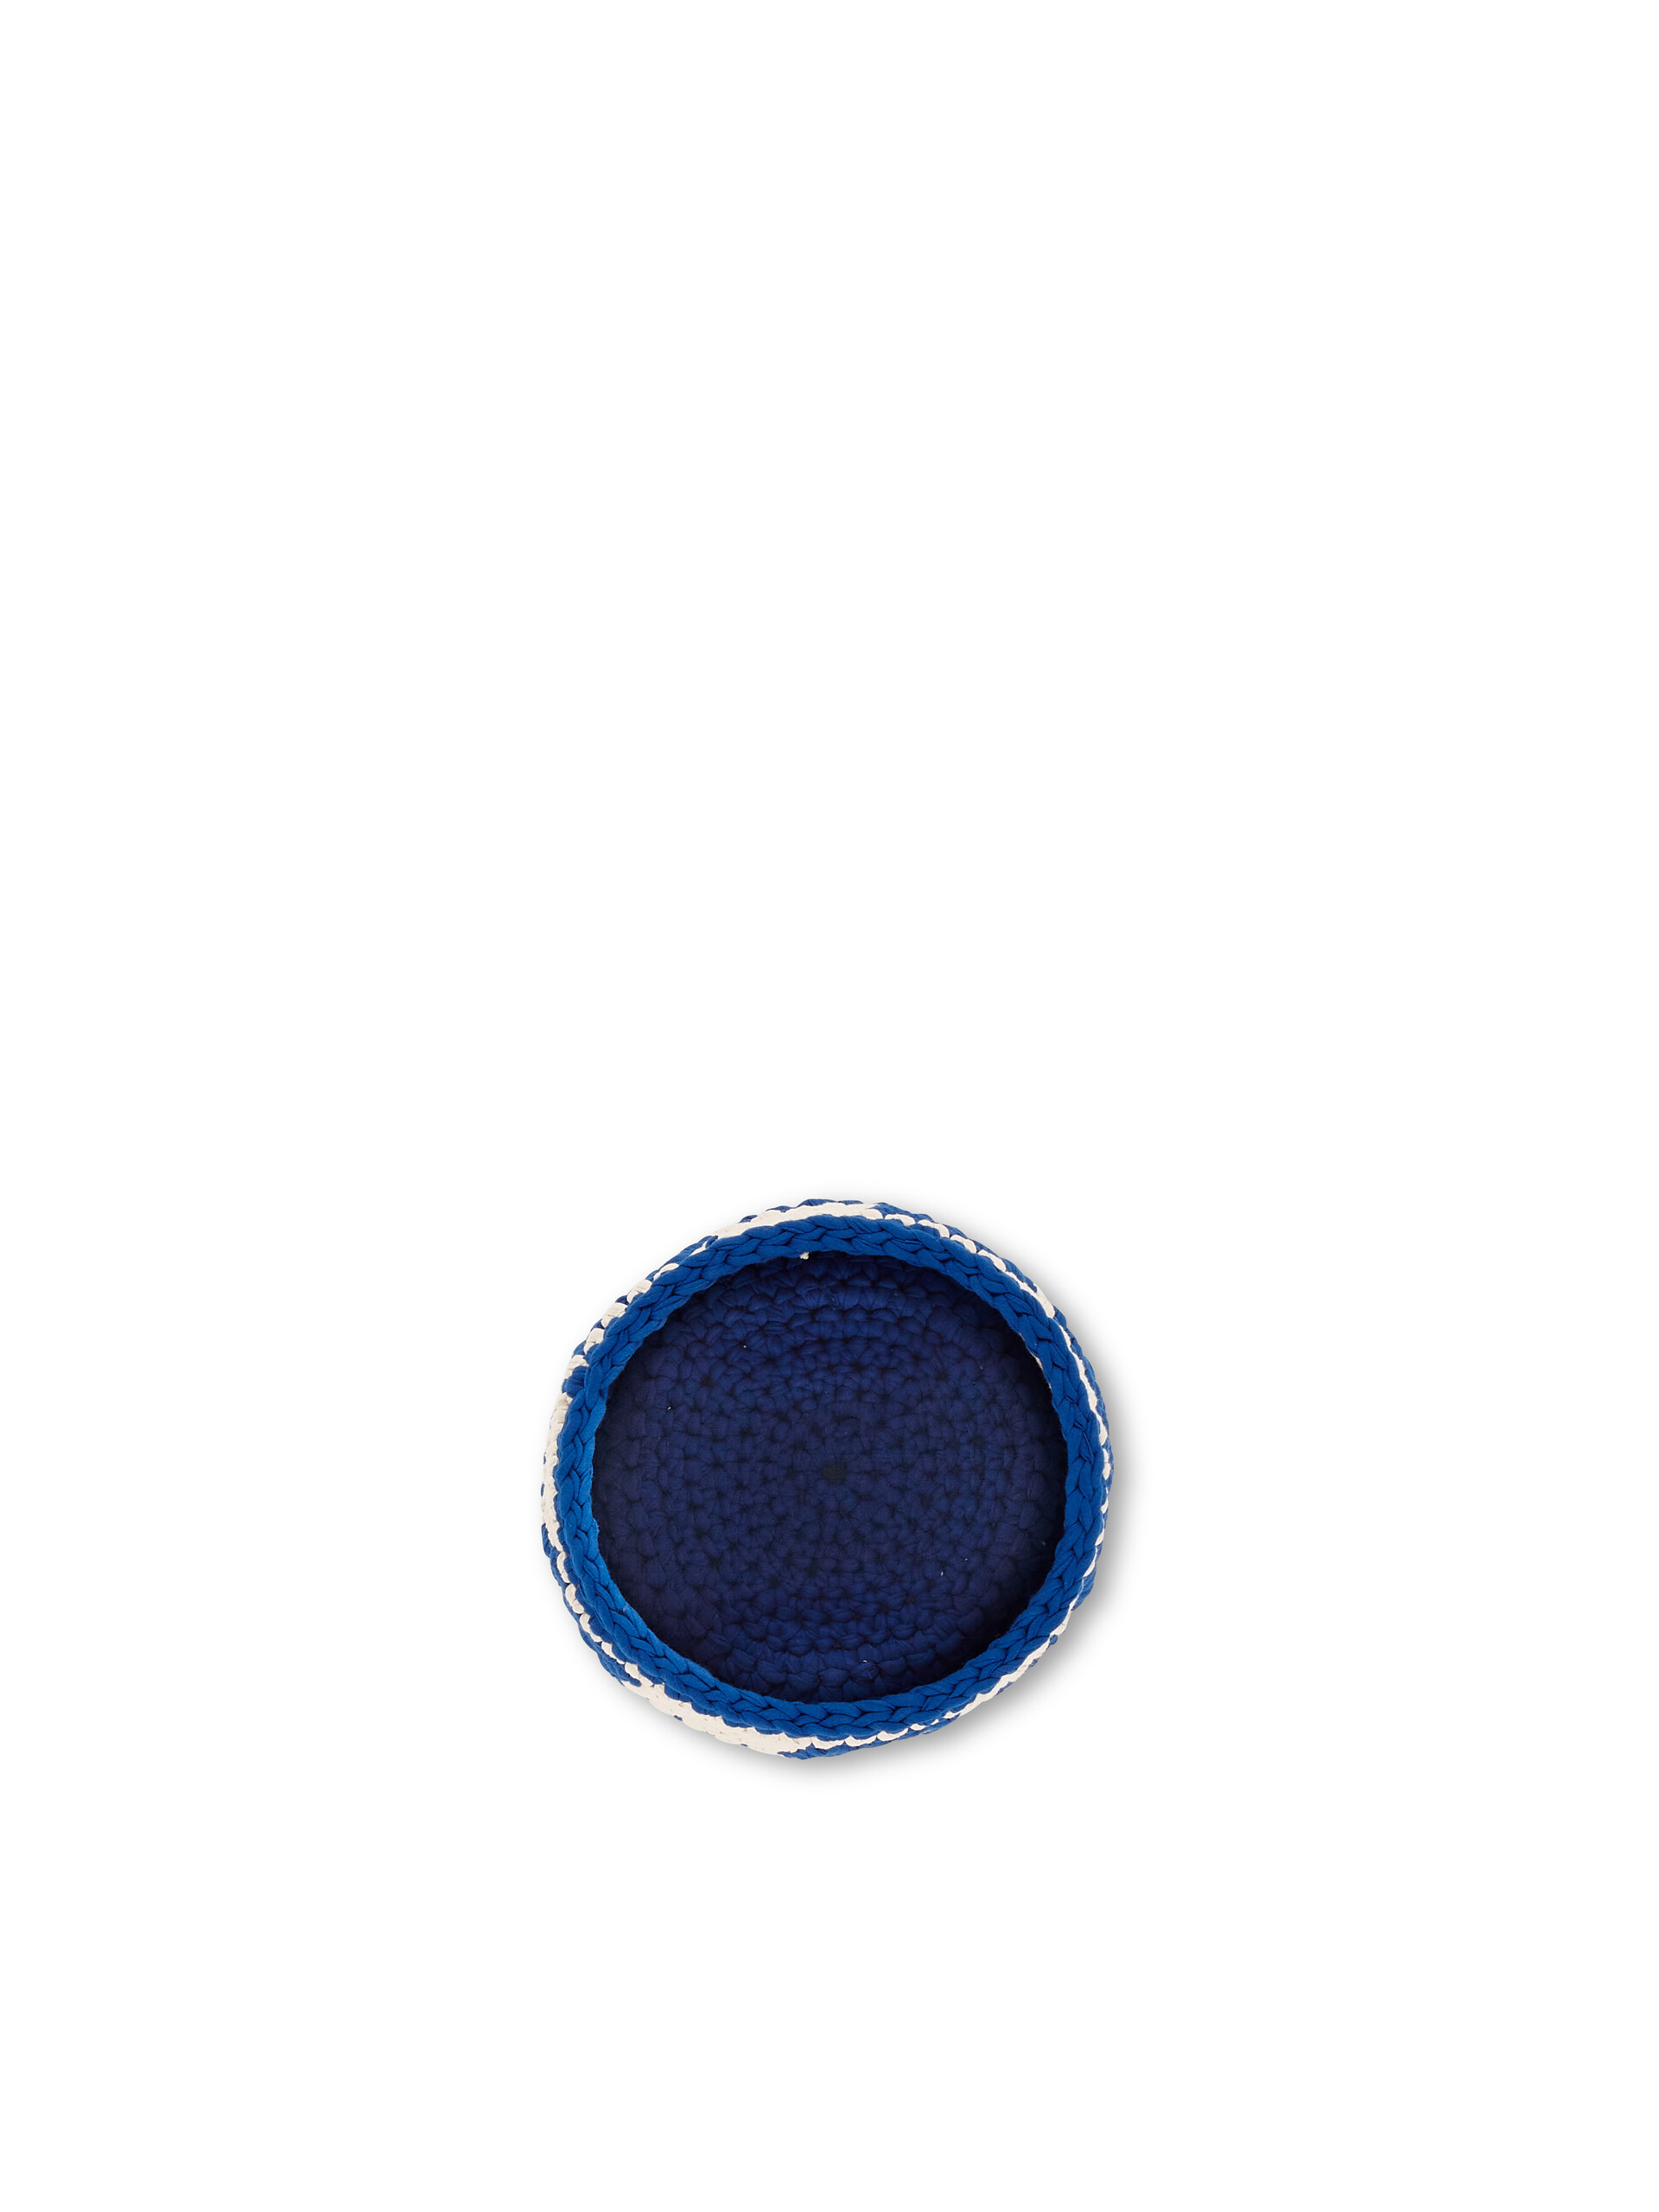 Small MARNI MARKET vase holder in white and blue crochet - Furniture - Image 4